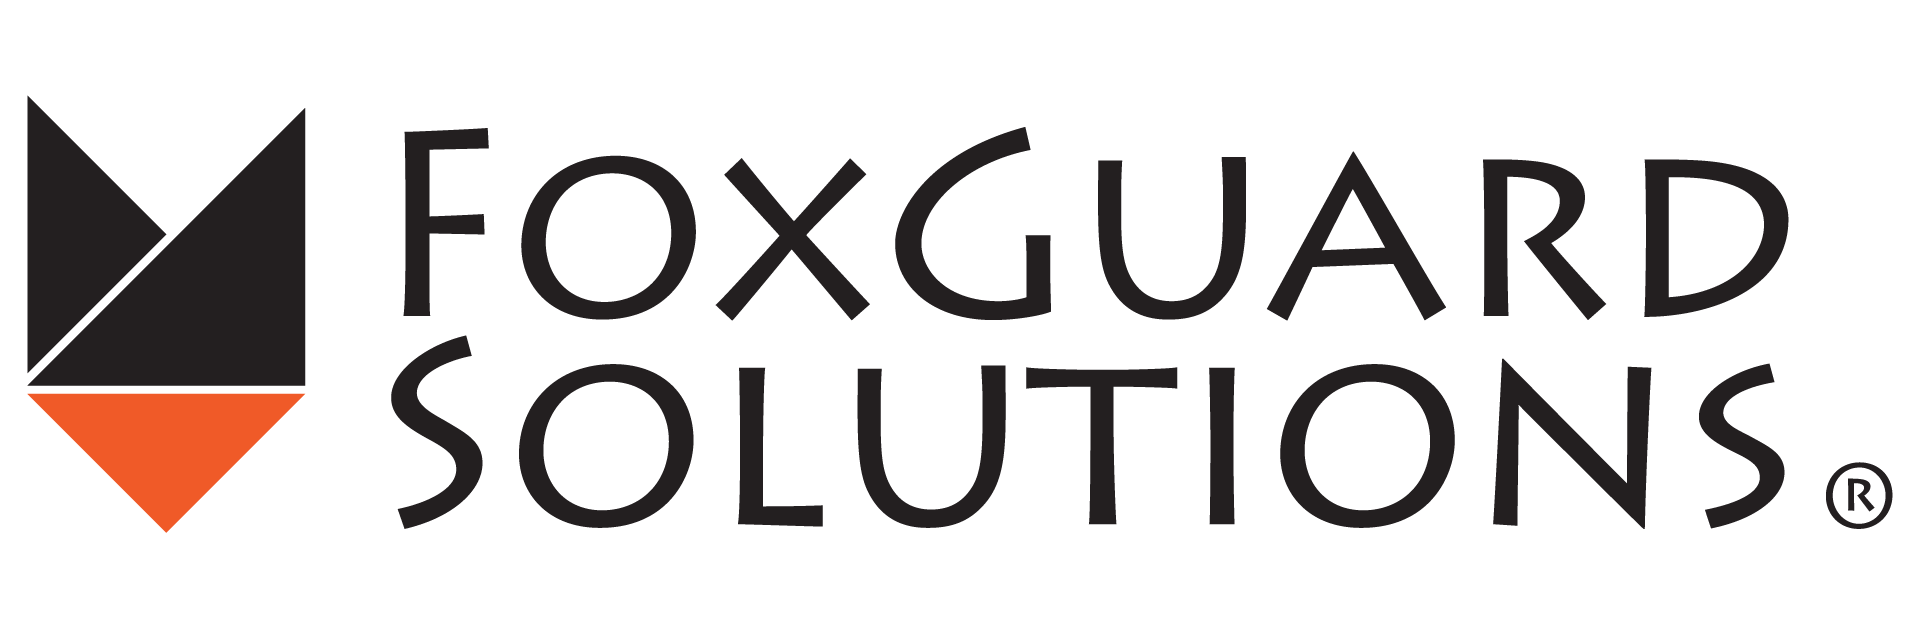 Foxguard Solutions